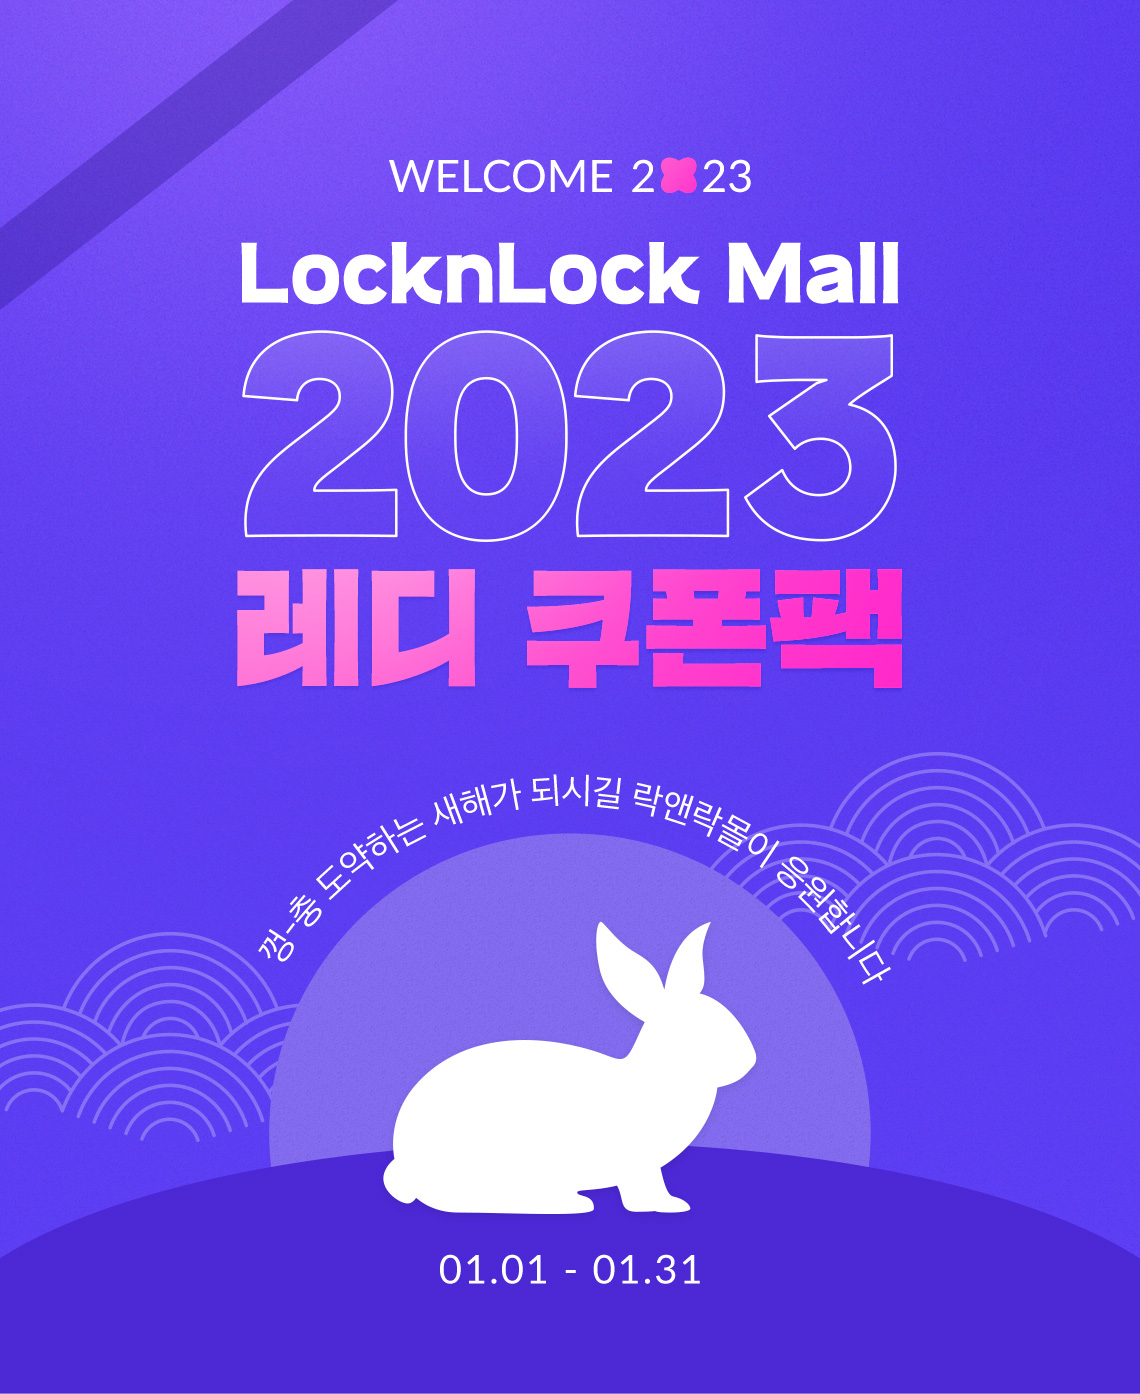 WELCOME 2023 LOCKNLOCK MALL 2023 레디 쿠폰팩 껑충  도약하는 새해가 되시길 락앤락몰이 응원합니다 01.01 ~ 01.31